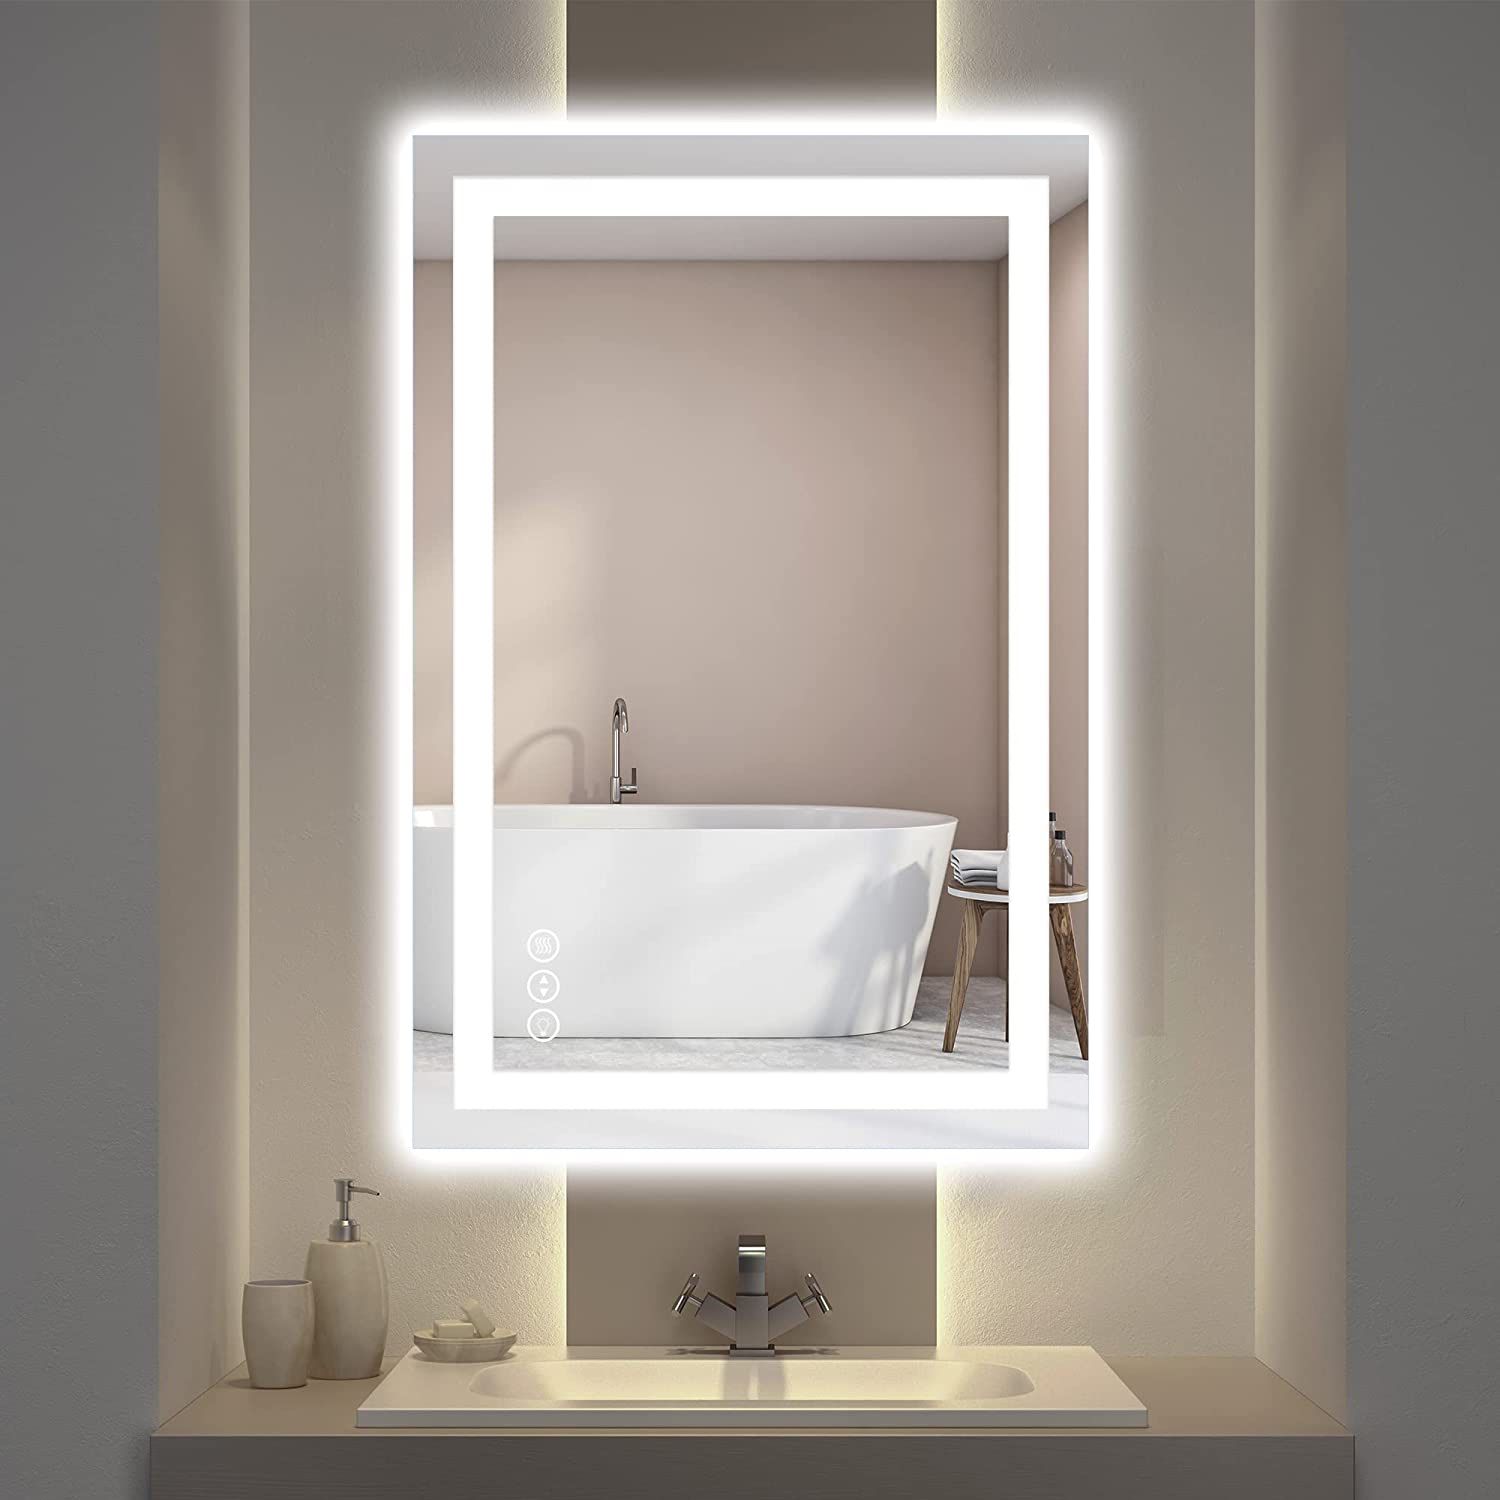 24x32 LED Bathroom Mirror, Shatterproof Wall Mounted Vanity Mirror, Light Color&Temperature Adjust with Memory Function,Anti-Fog&Auto-Off Defogging Ma